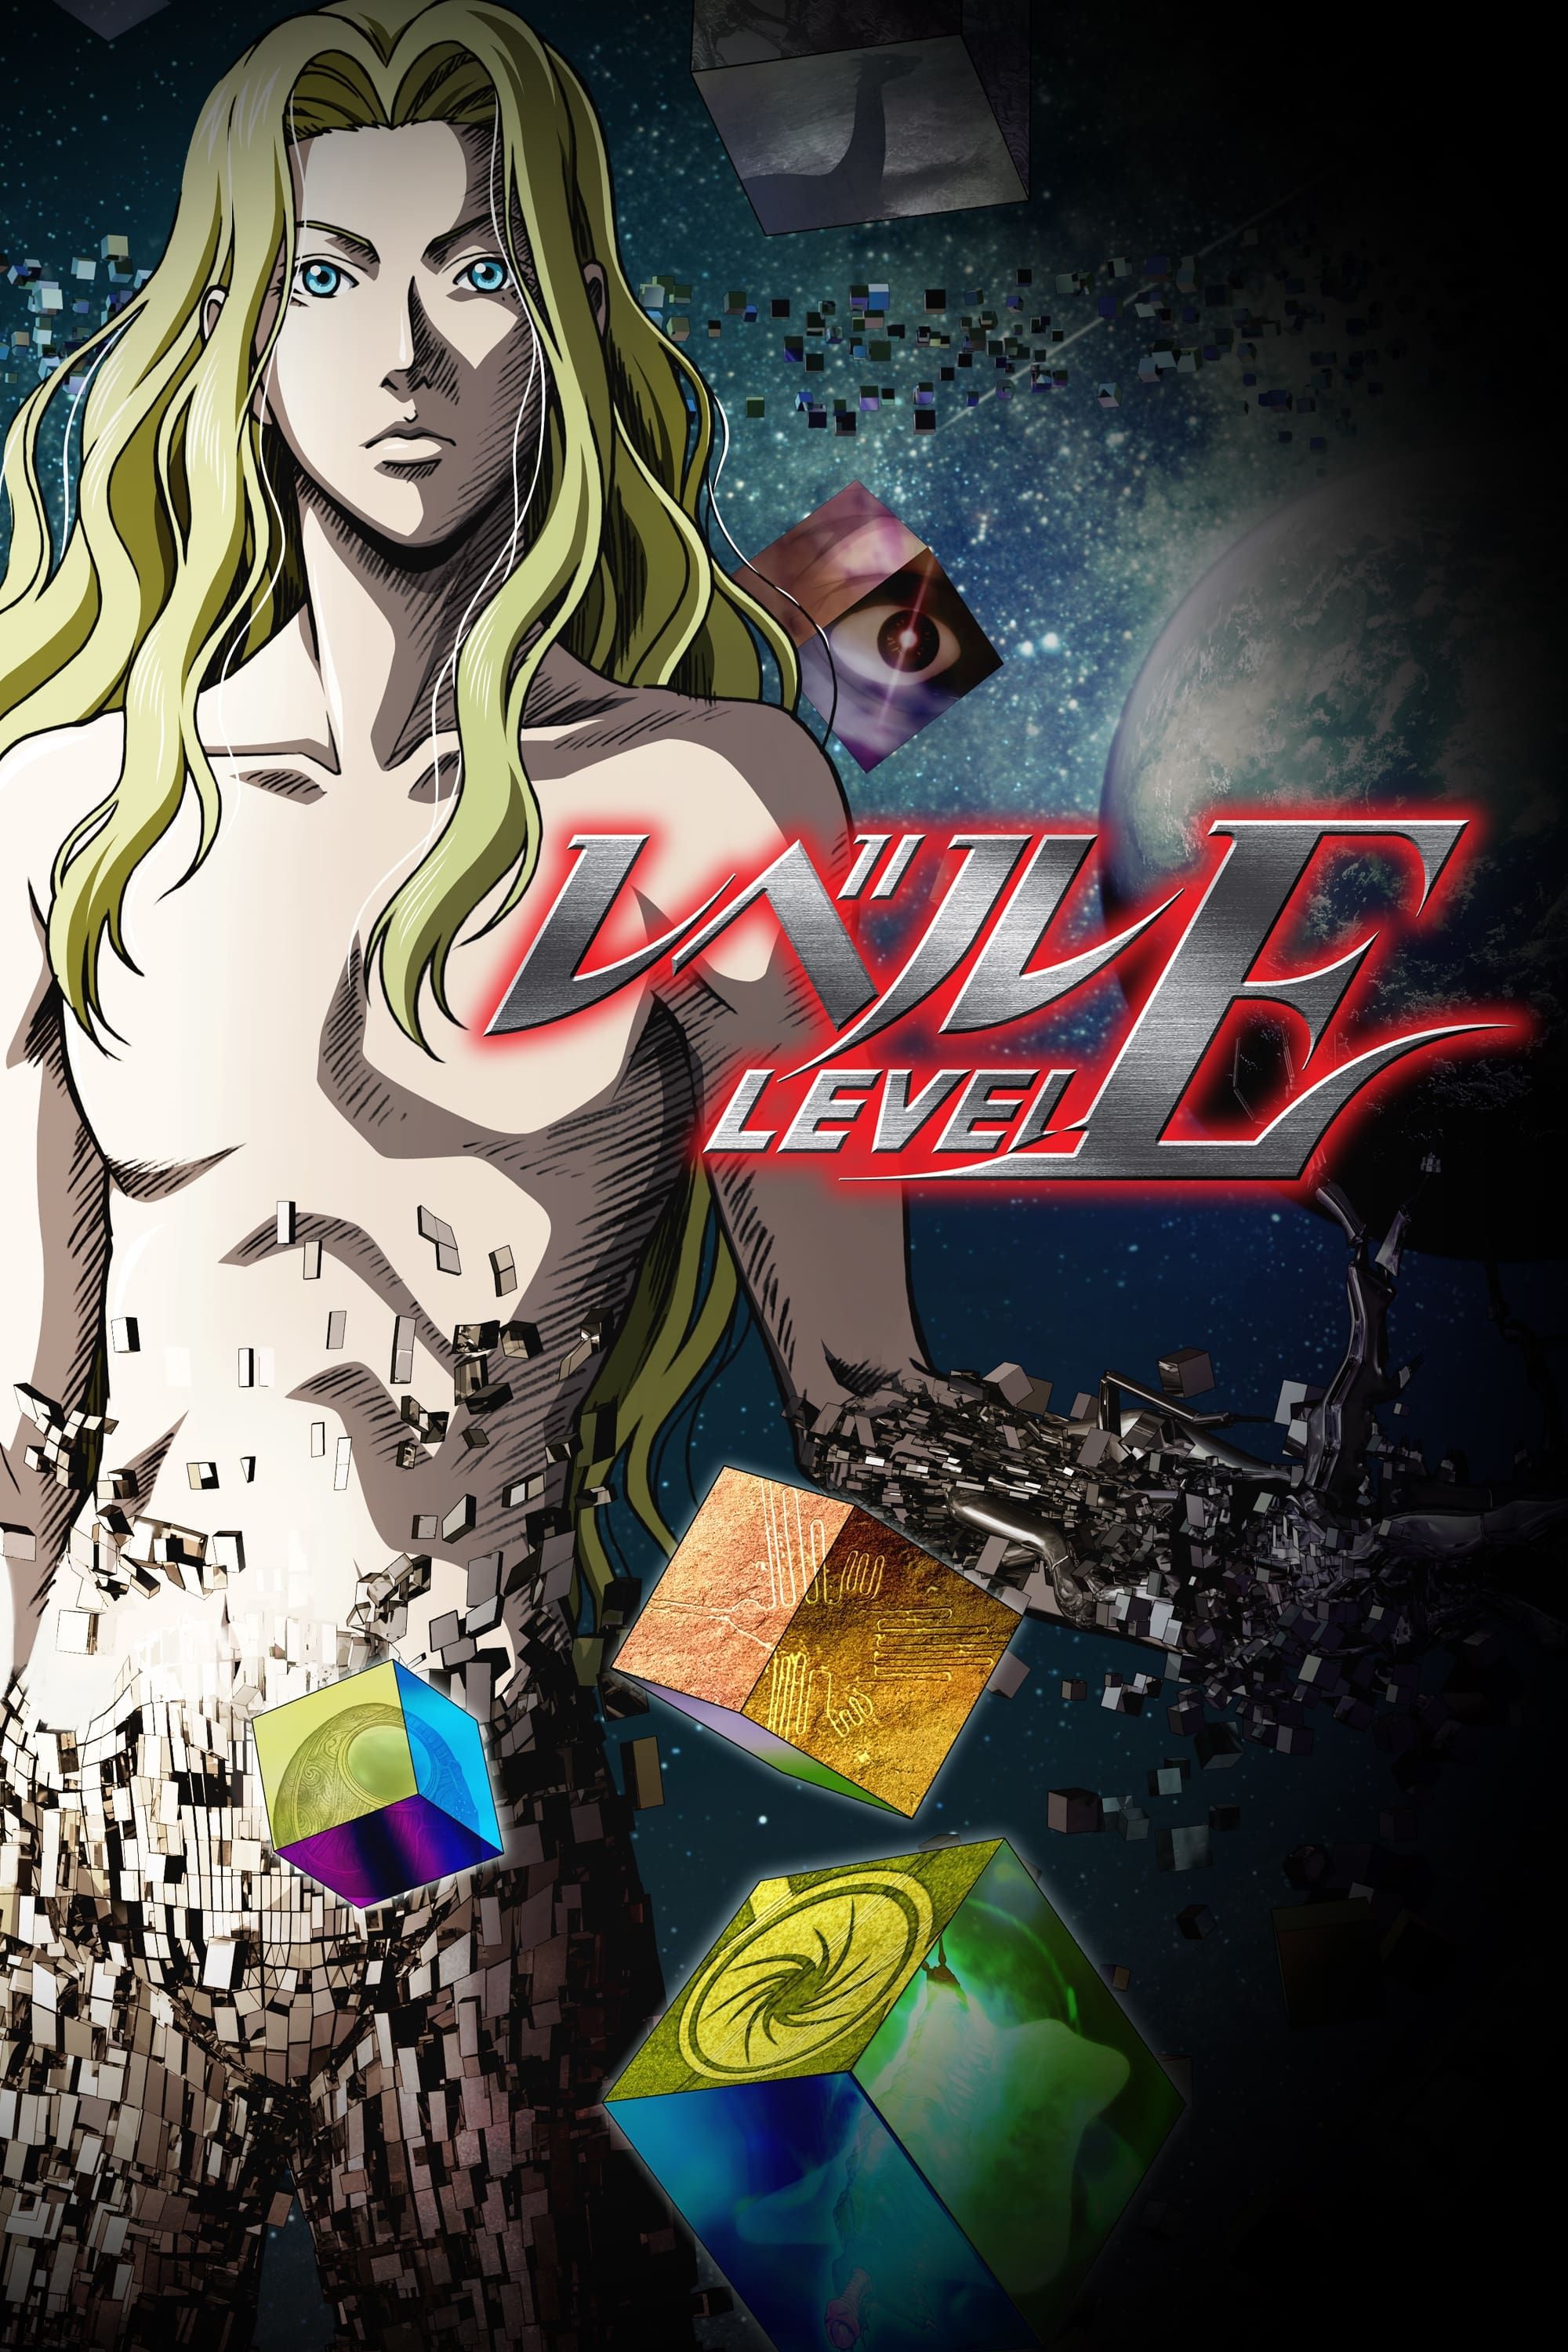 Level E (TV) (Sub) Full DVD